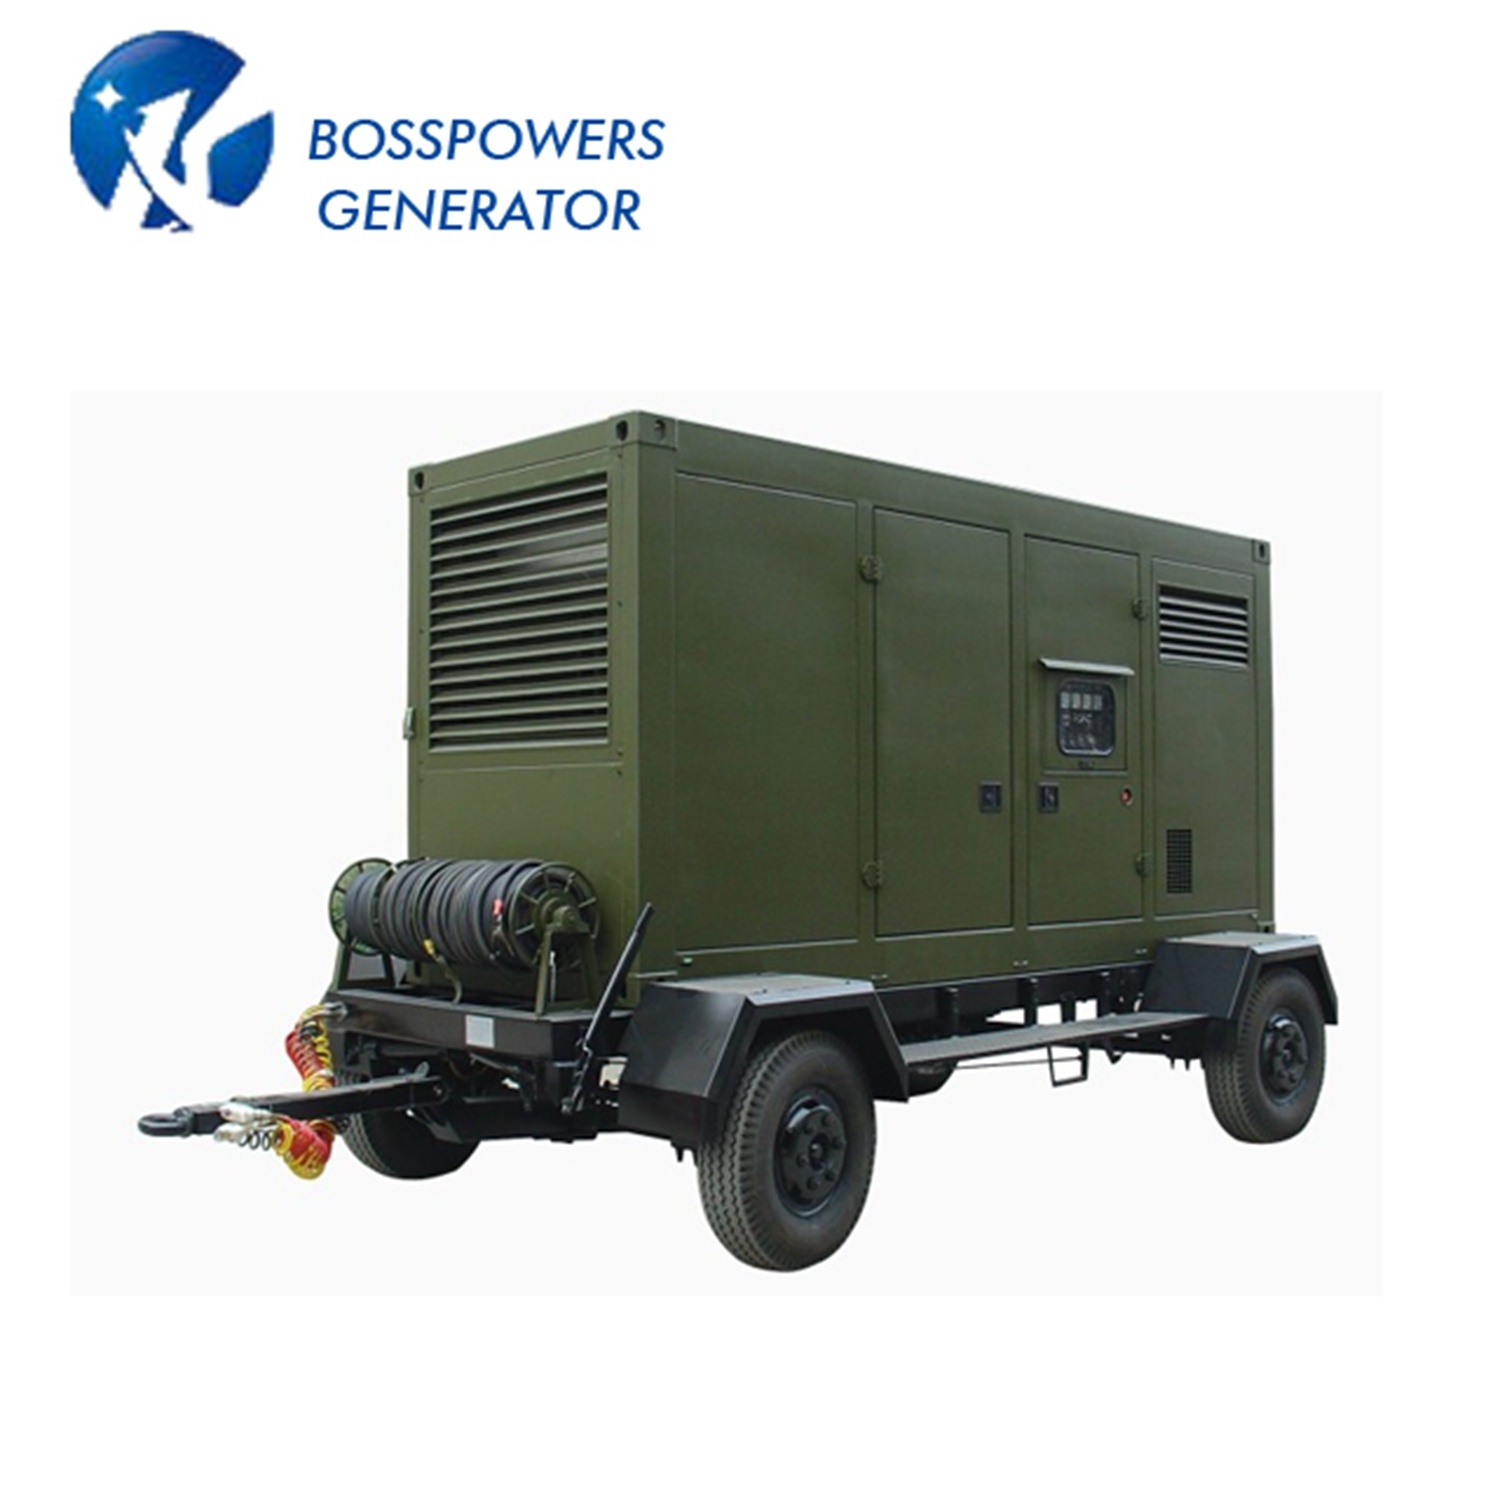 Trailer Mounted Portable Mobile Diesel Silent Power Generator 15kw